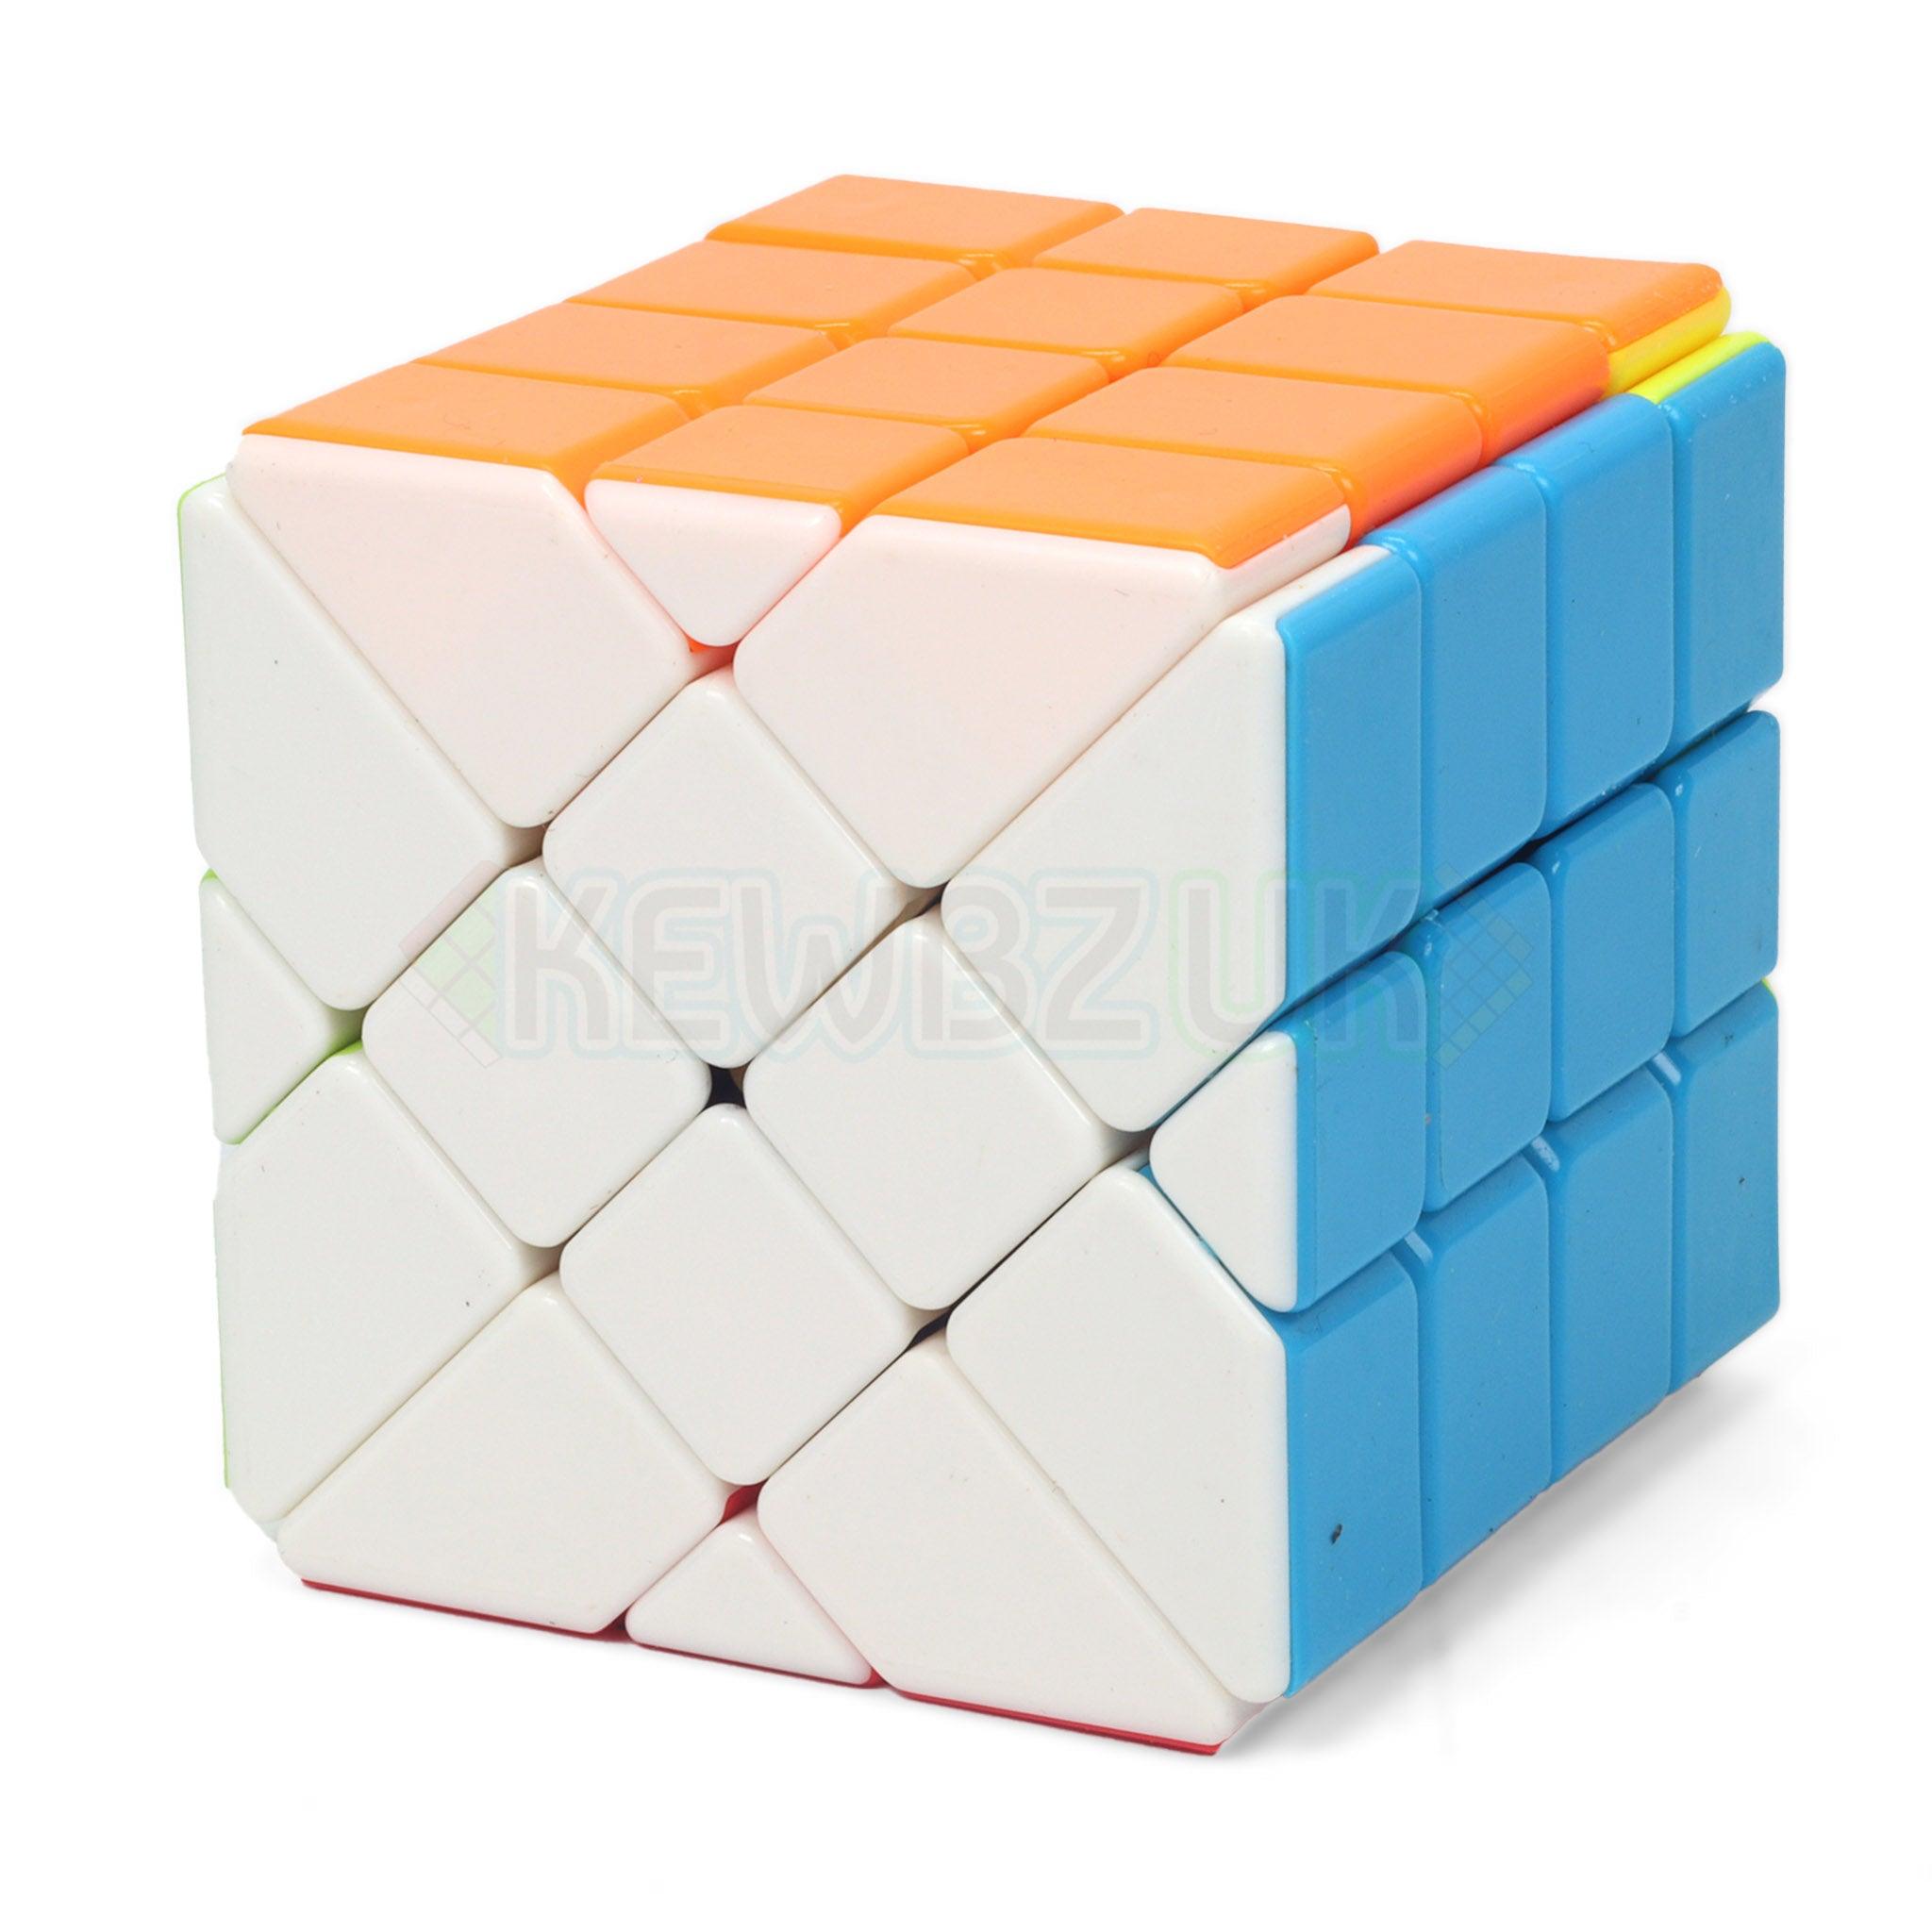 FanXin 4x4 Fisher Cube